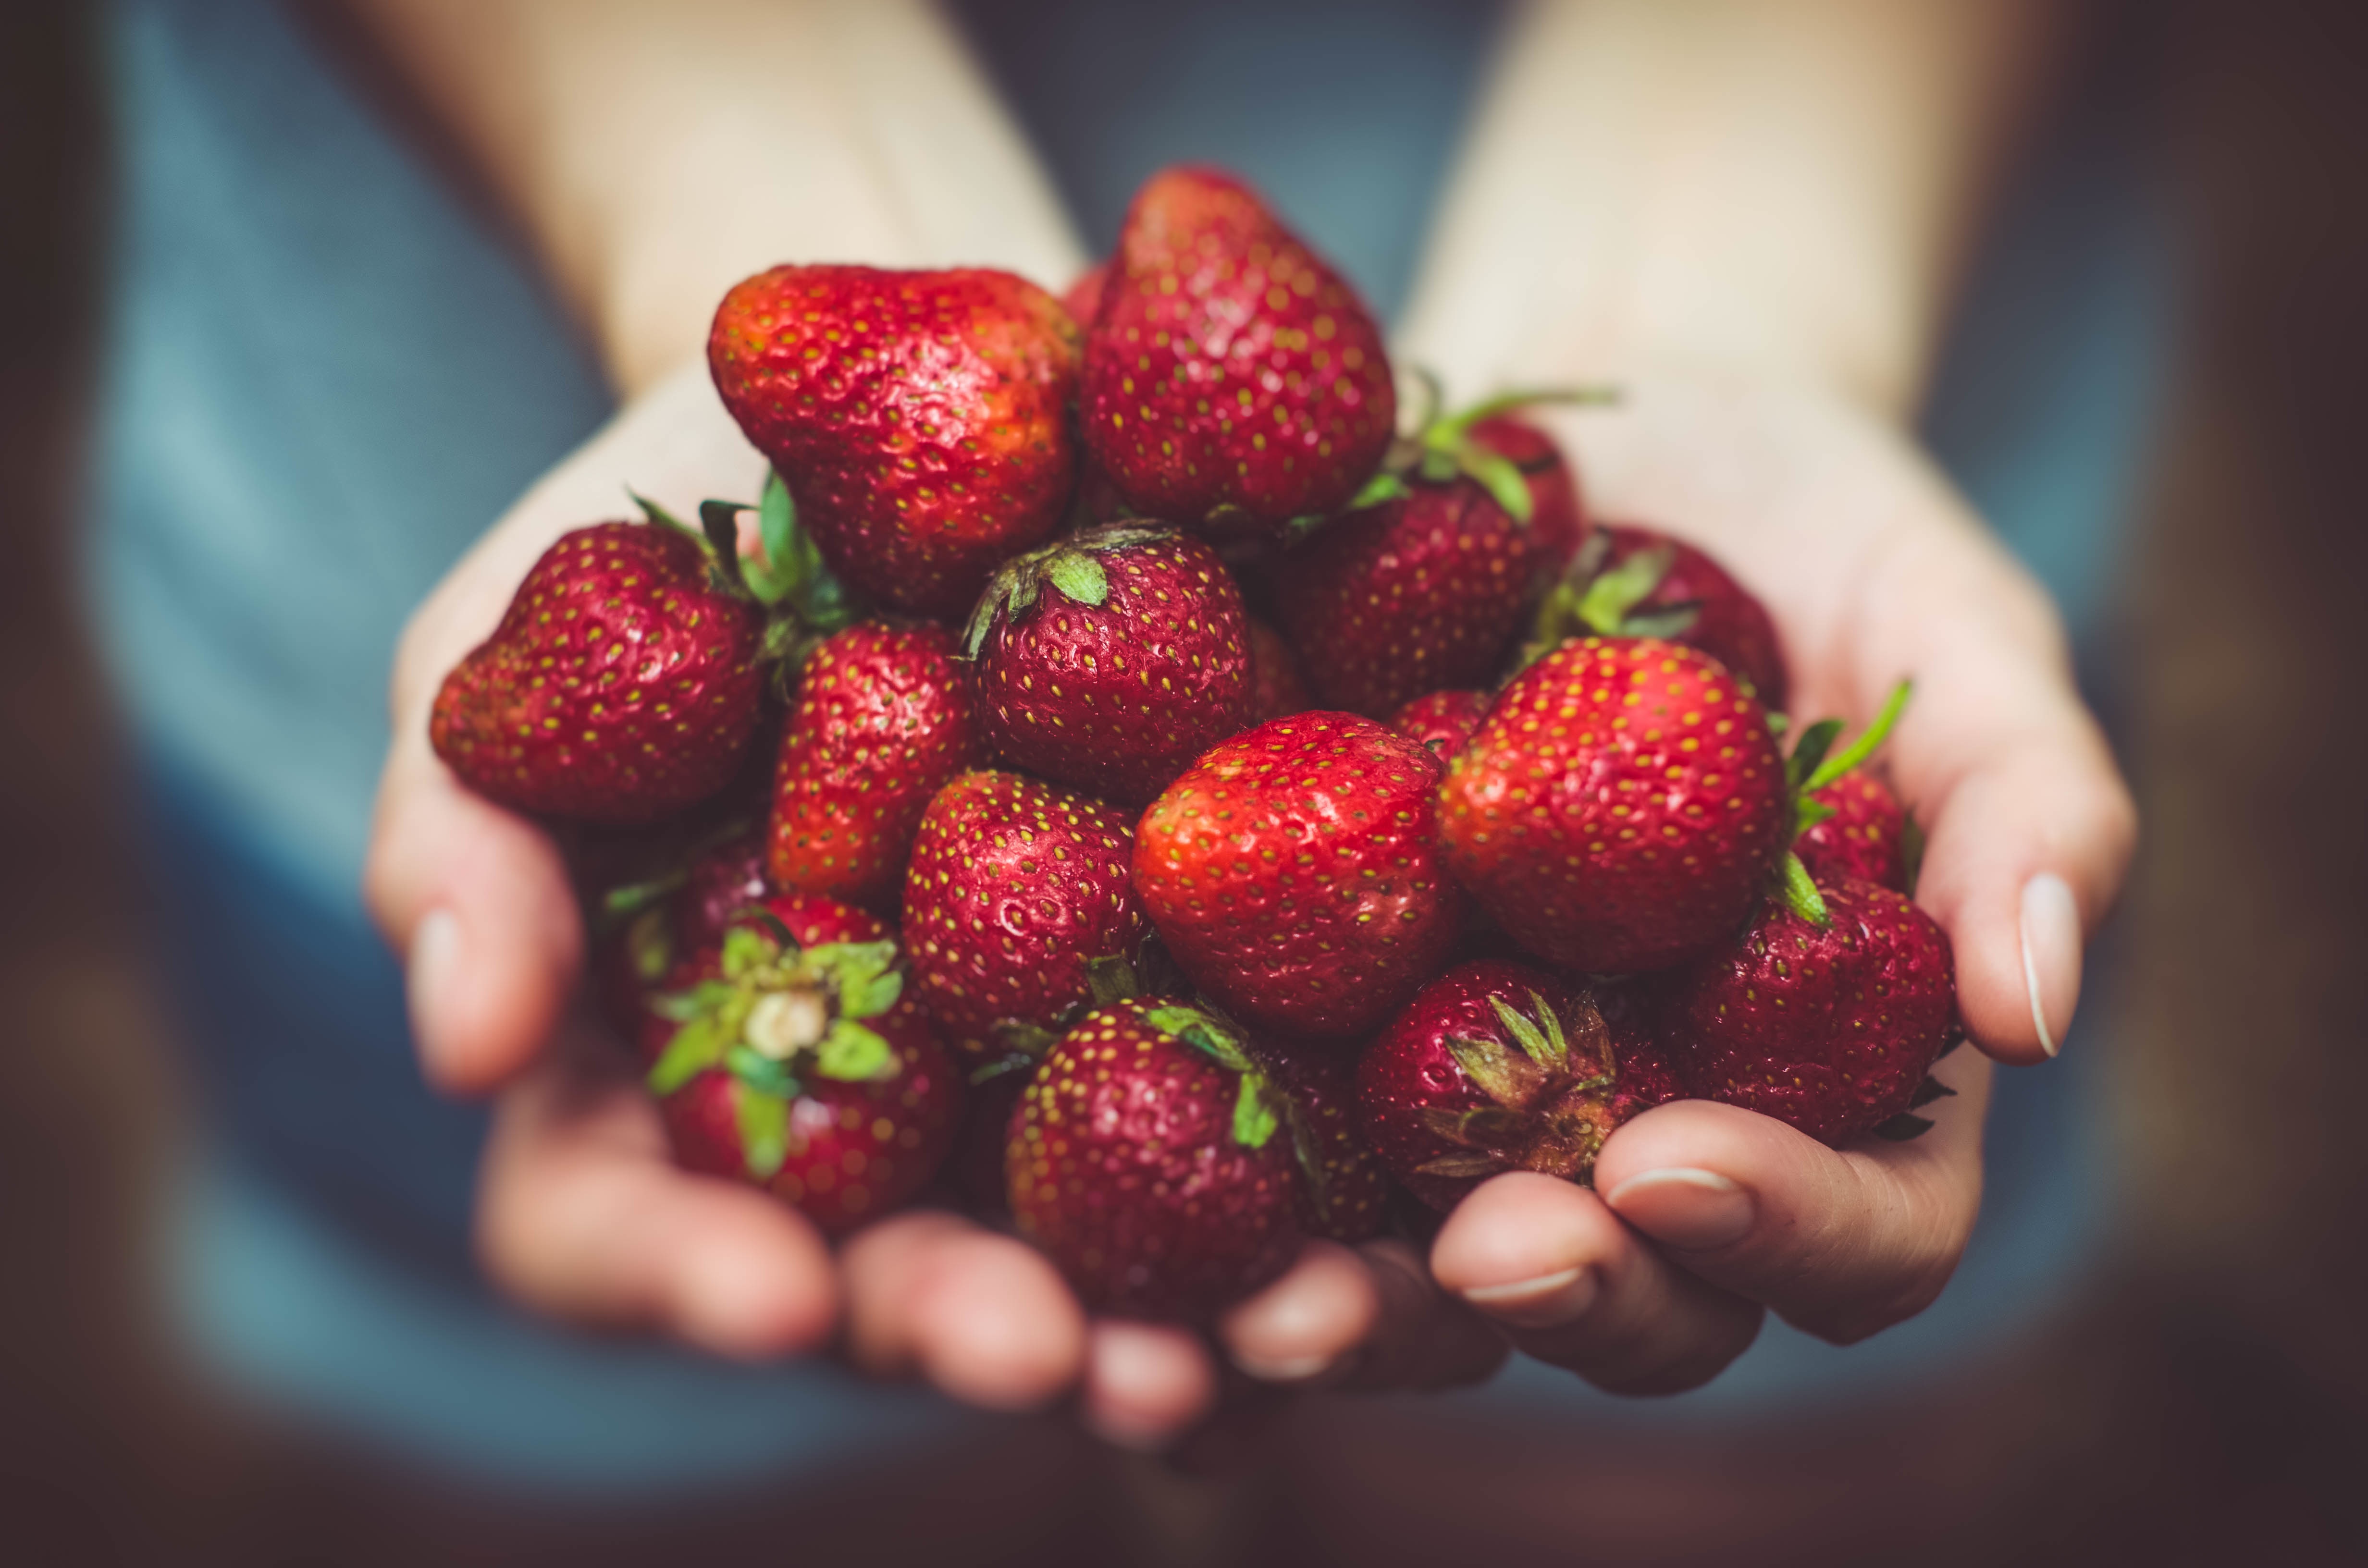 Hand Holding Strawberries image - Free stock photo - Public Domain ...